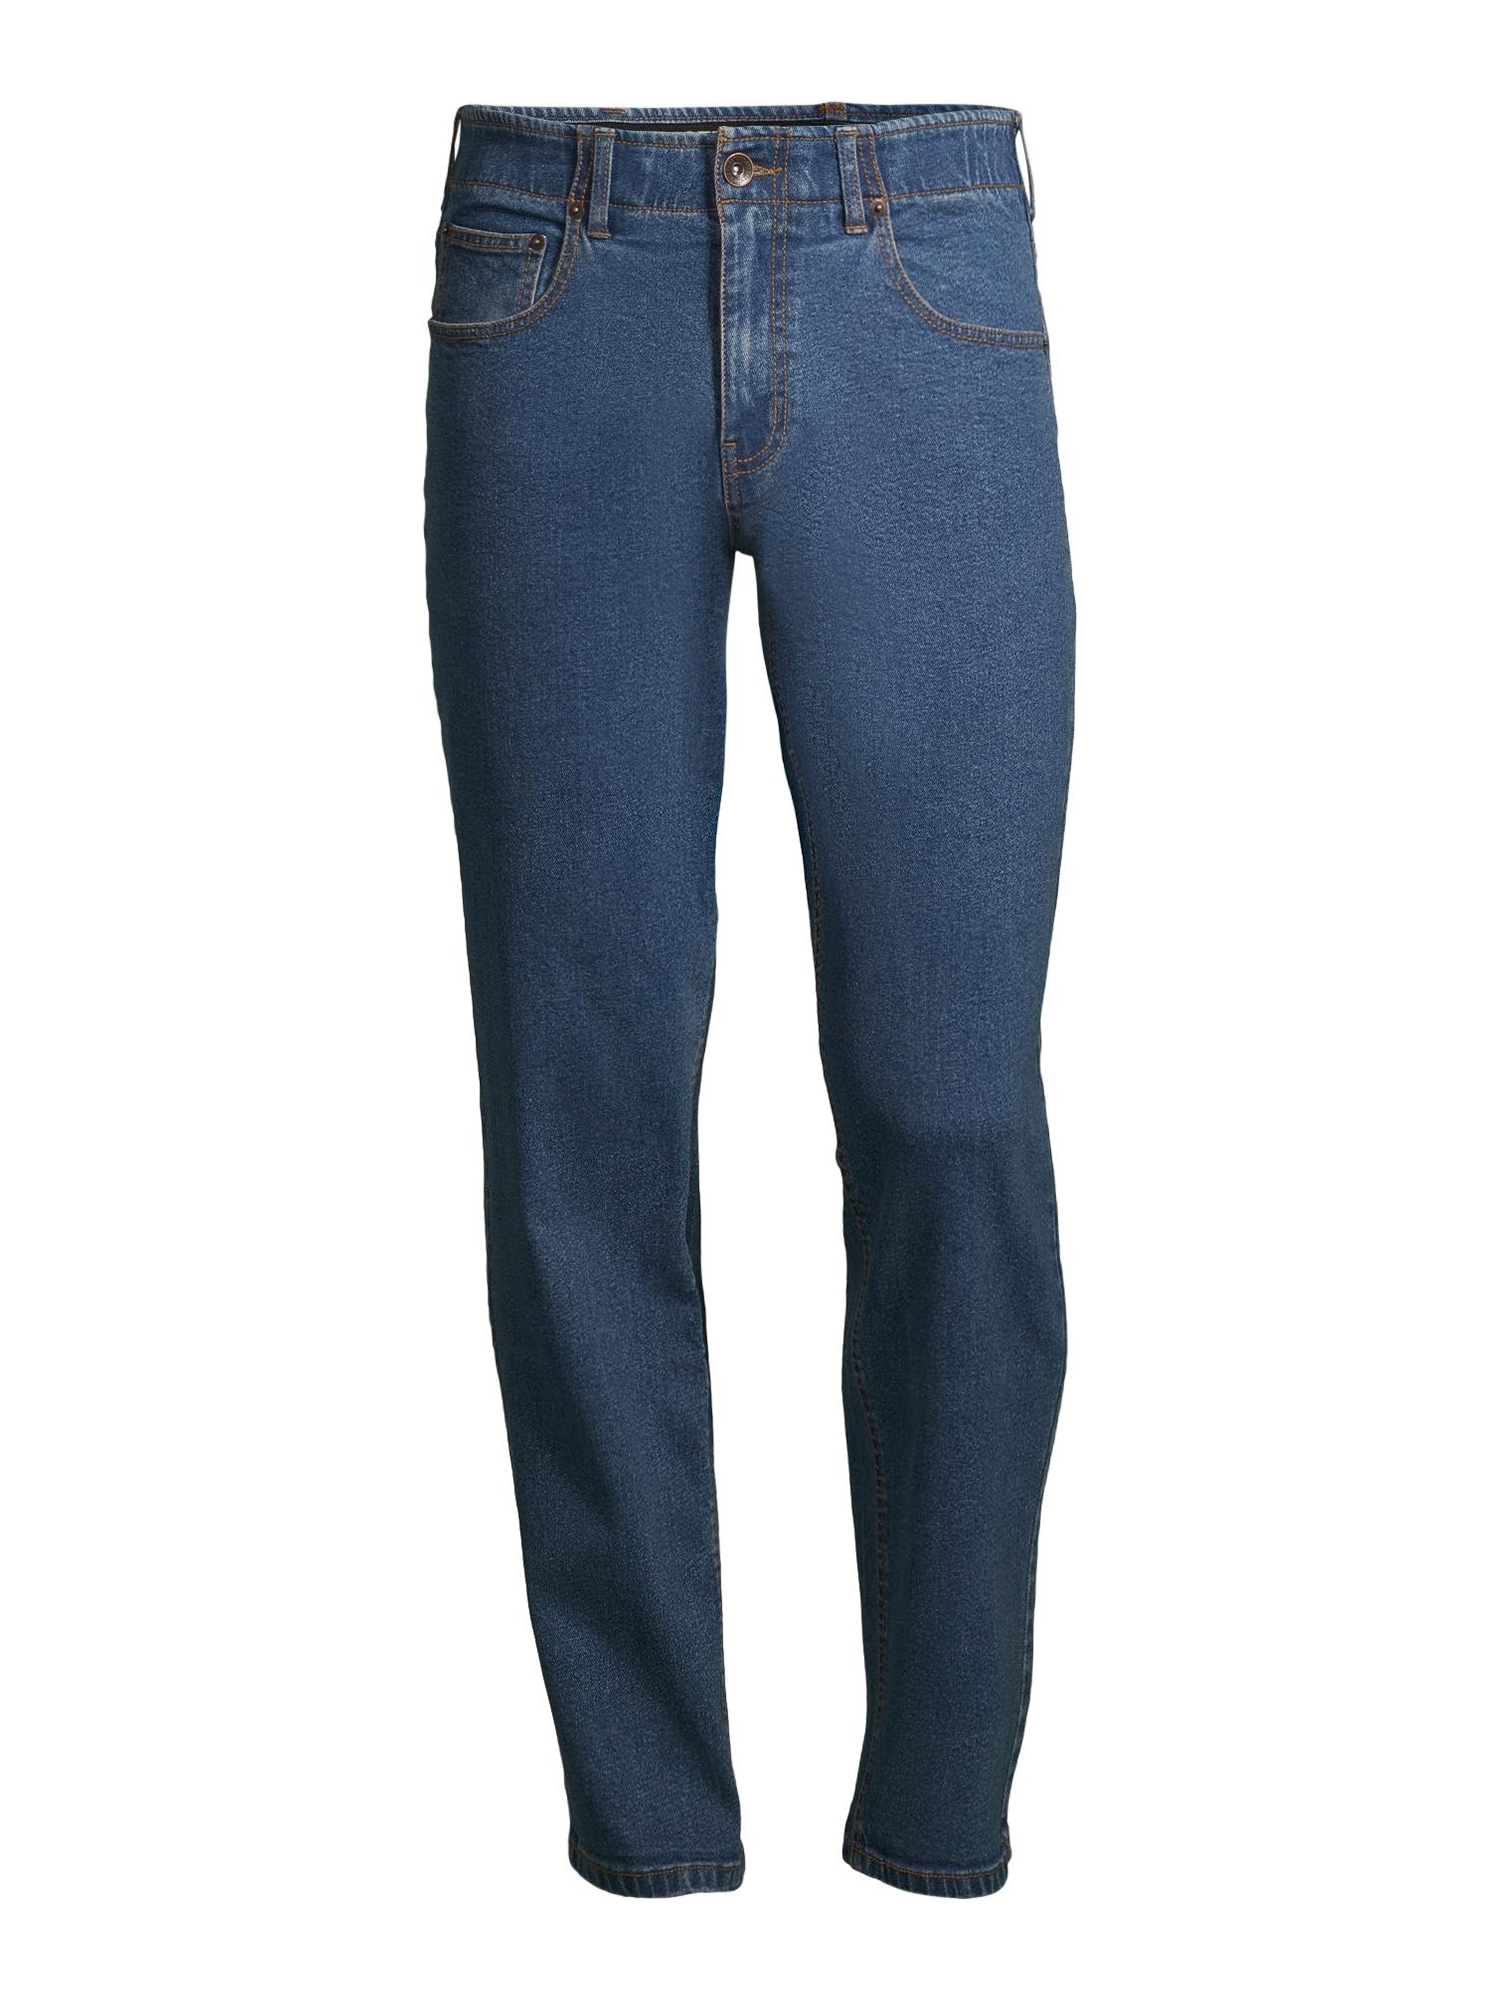 Hollywood Jeans Men's Active Flex Denim Straight Fit Jeans - image 3 of 6